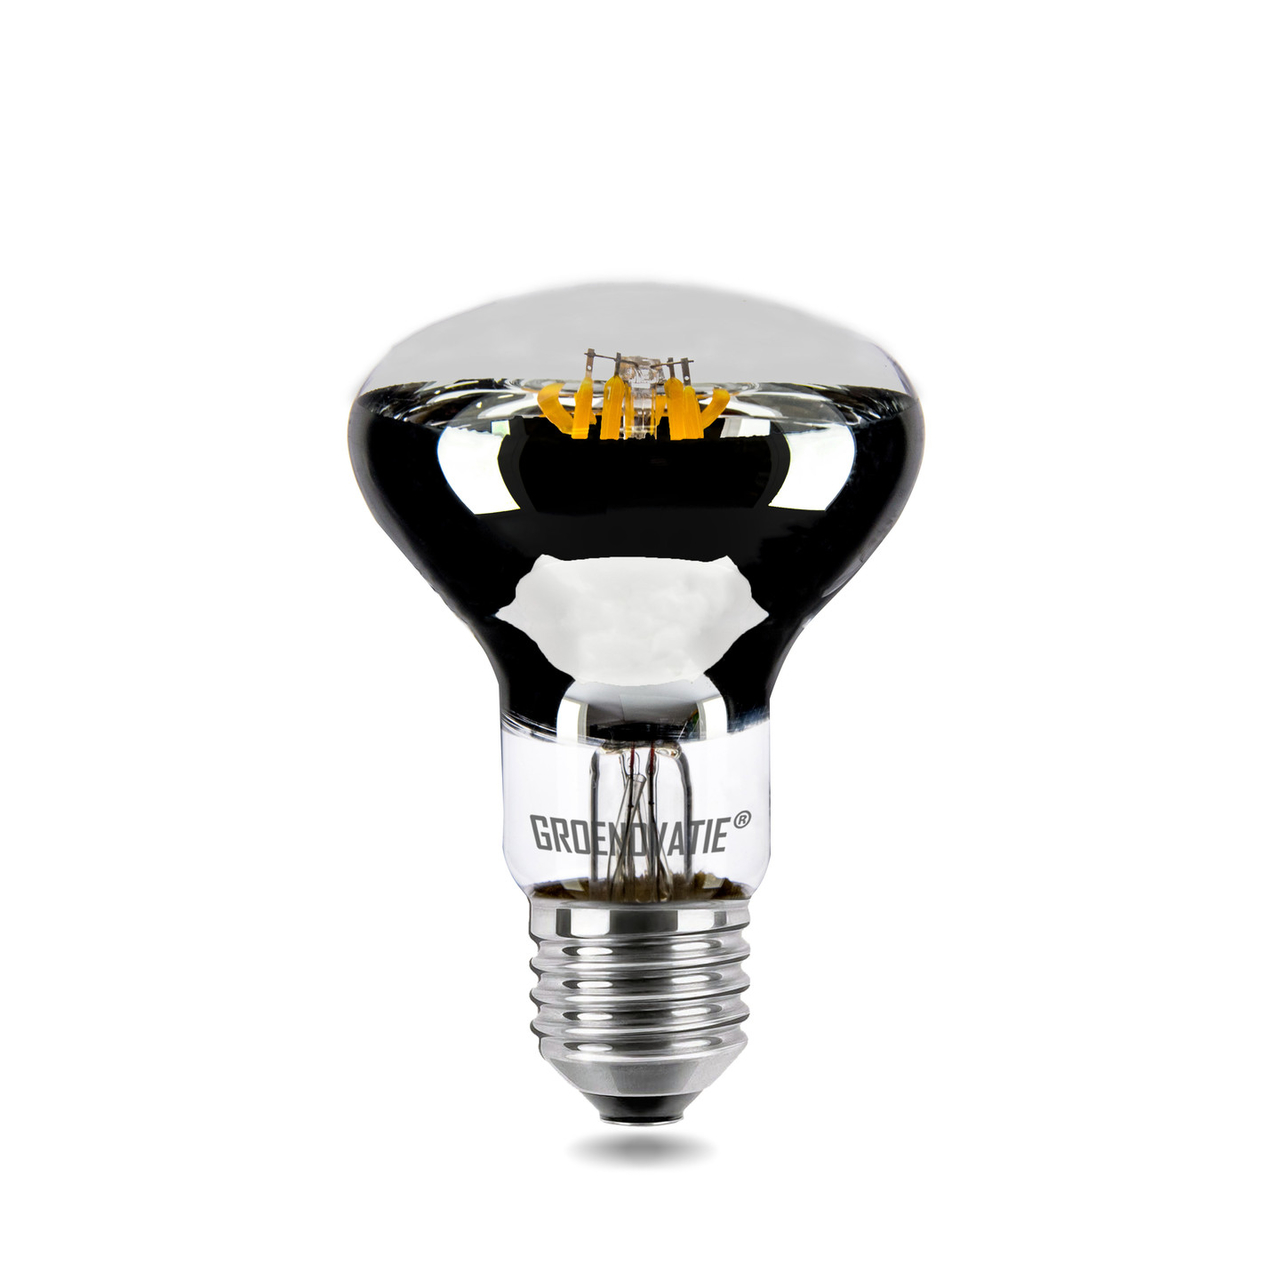 Ongrijpbaar bunker Min E27 LED Filament Reflectorlamp 4W - LED Reflectorlampen